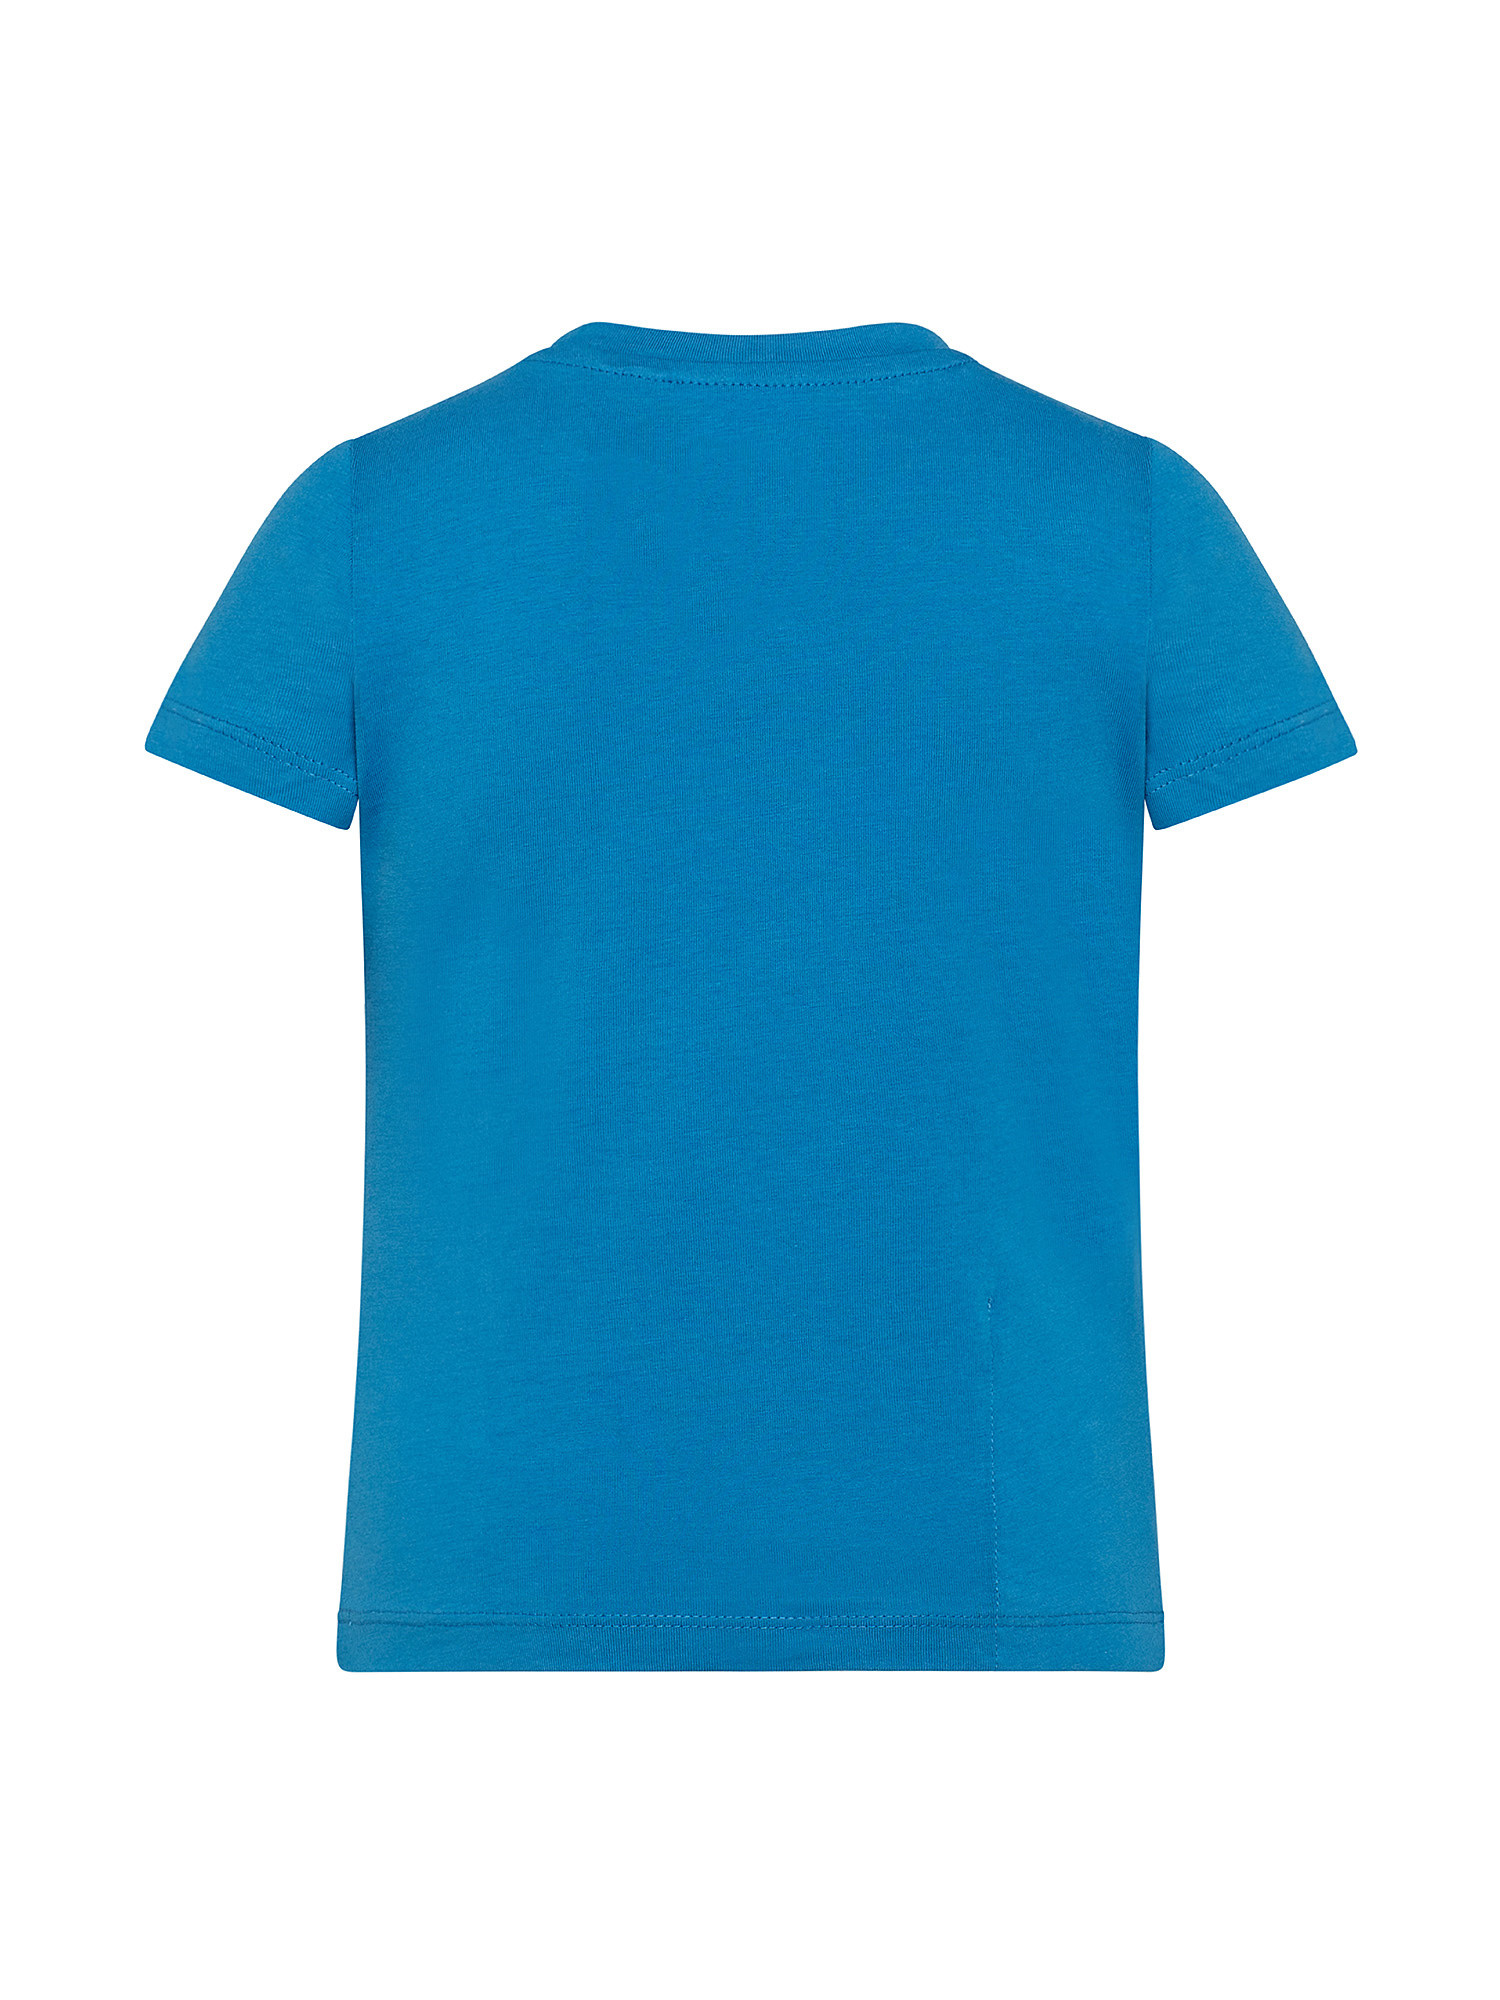 T-shirt bambino regular fit, Light Blue, large image number 1